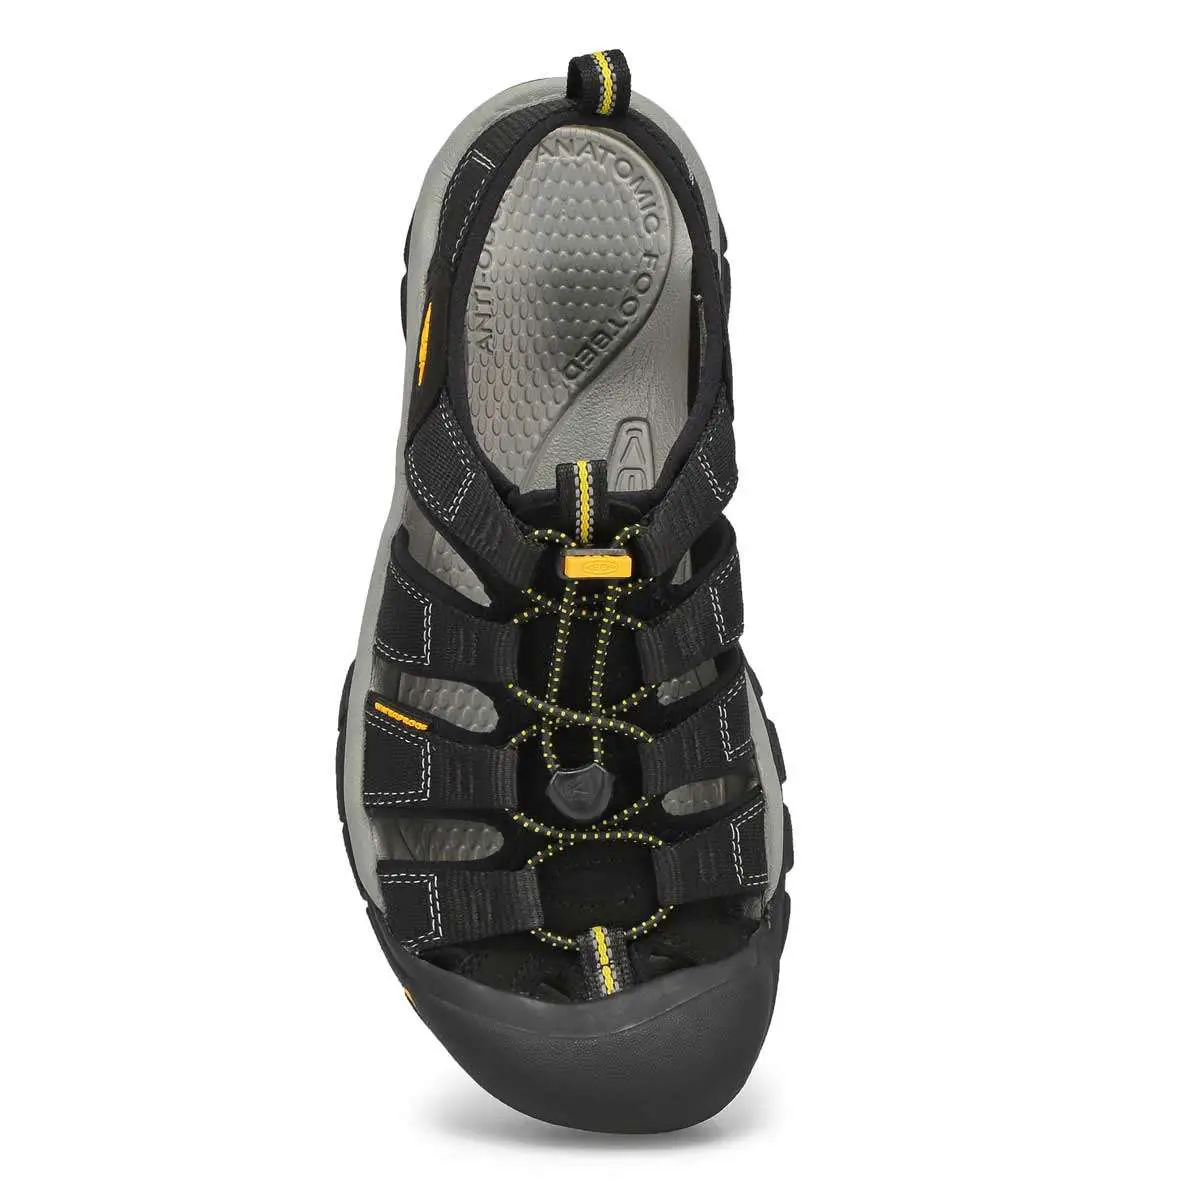 KEEN Mens Newport H2 Sandals 1001907 Black Size 11 for sale online